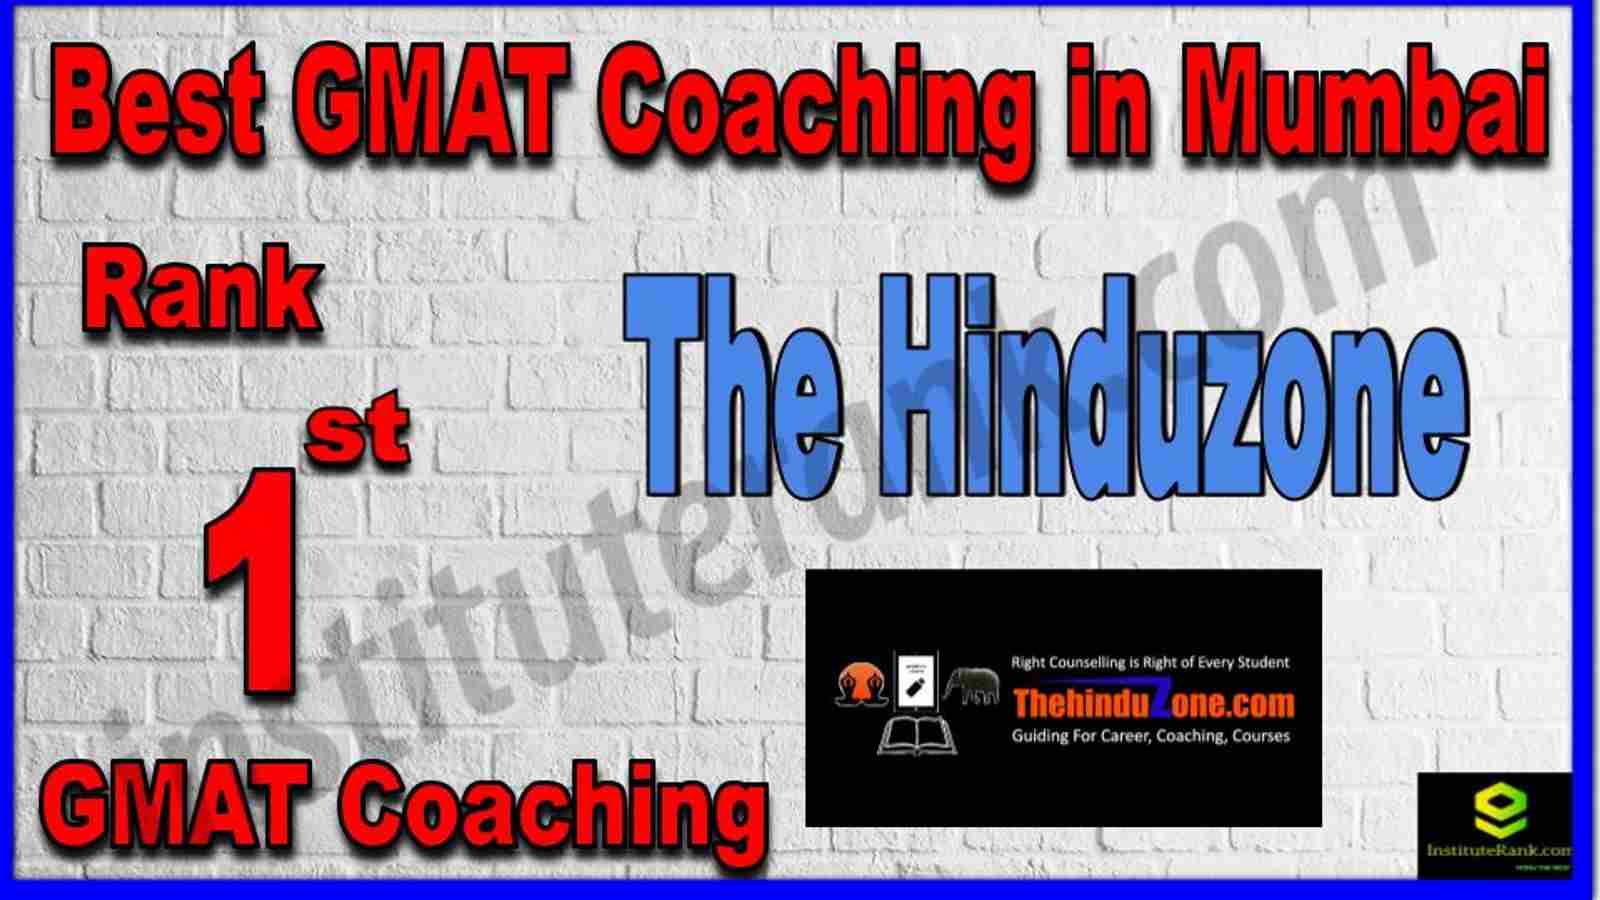 Rank 1st Best GMAT Coaching in Mumbai